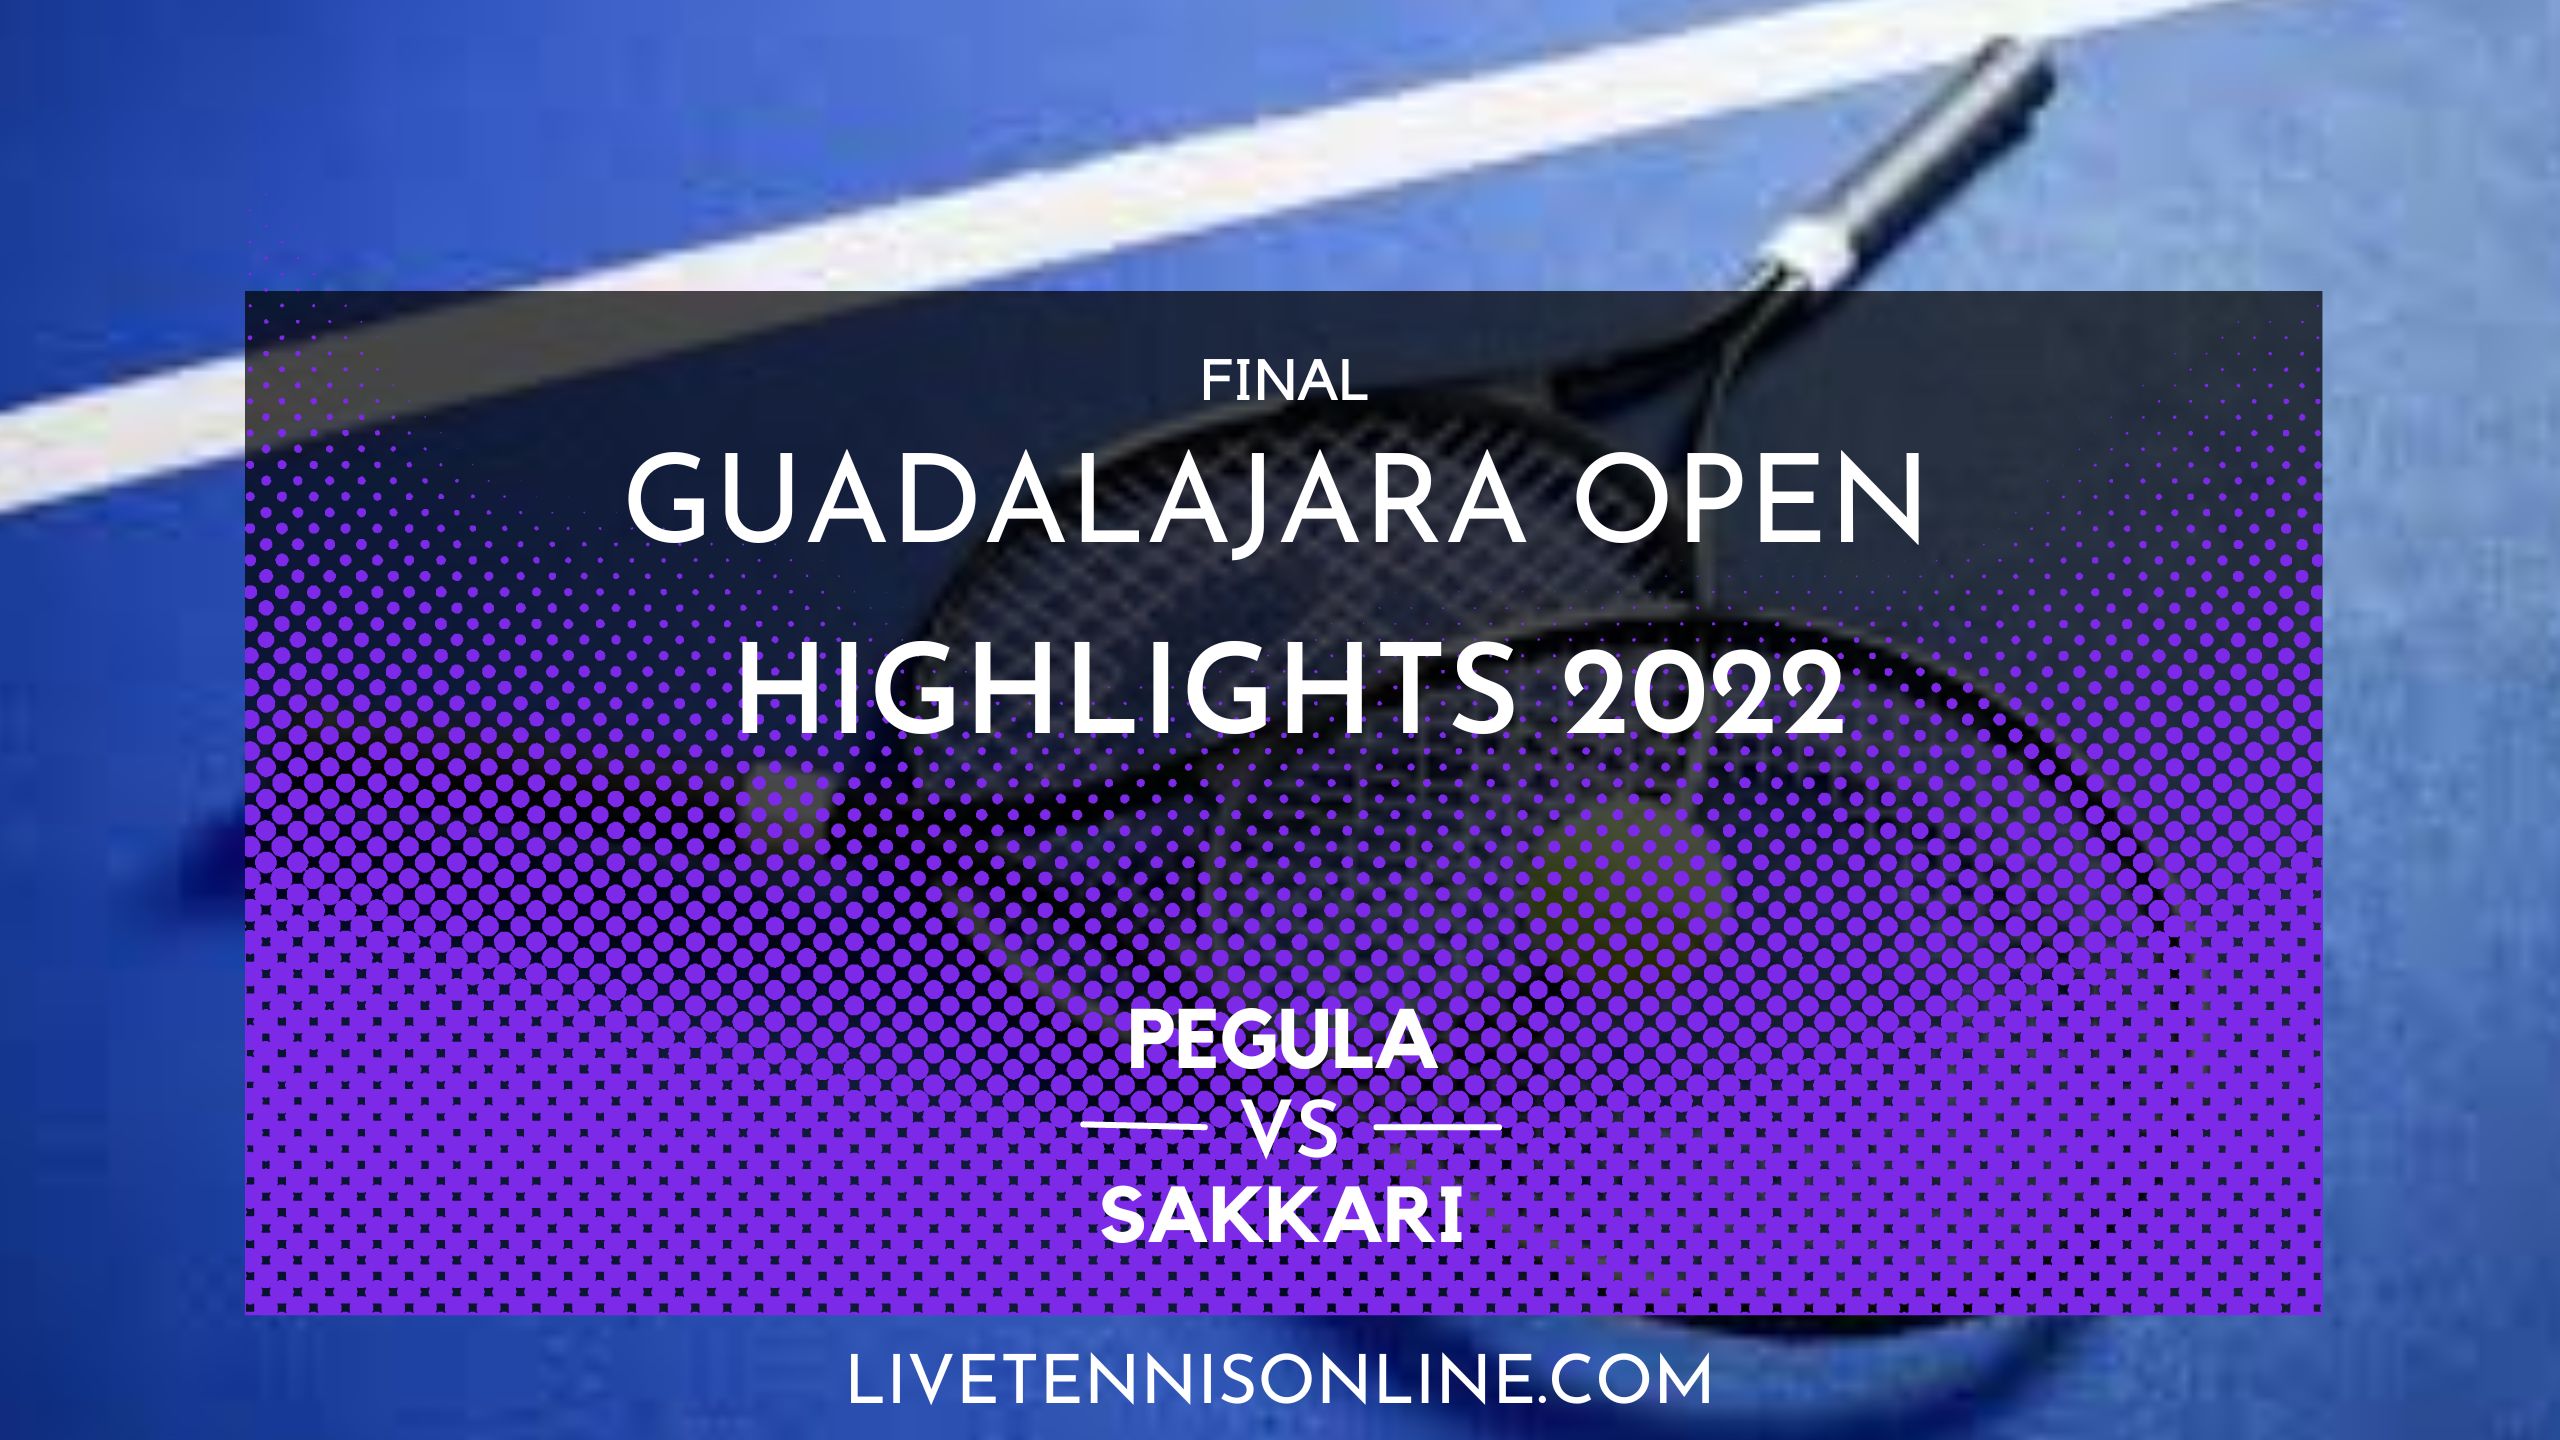 Pegula Vs Sakkari Final Highlights 2022 Guadalajara Open